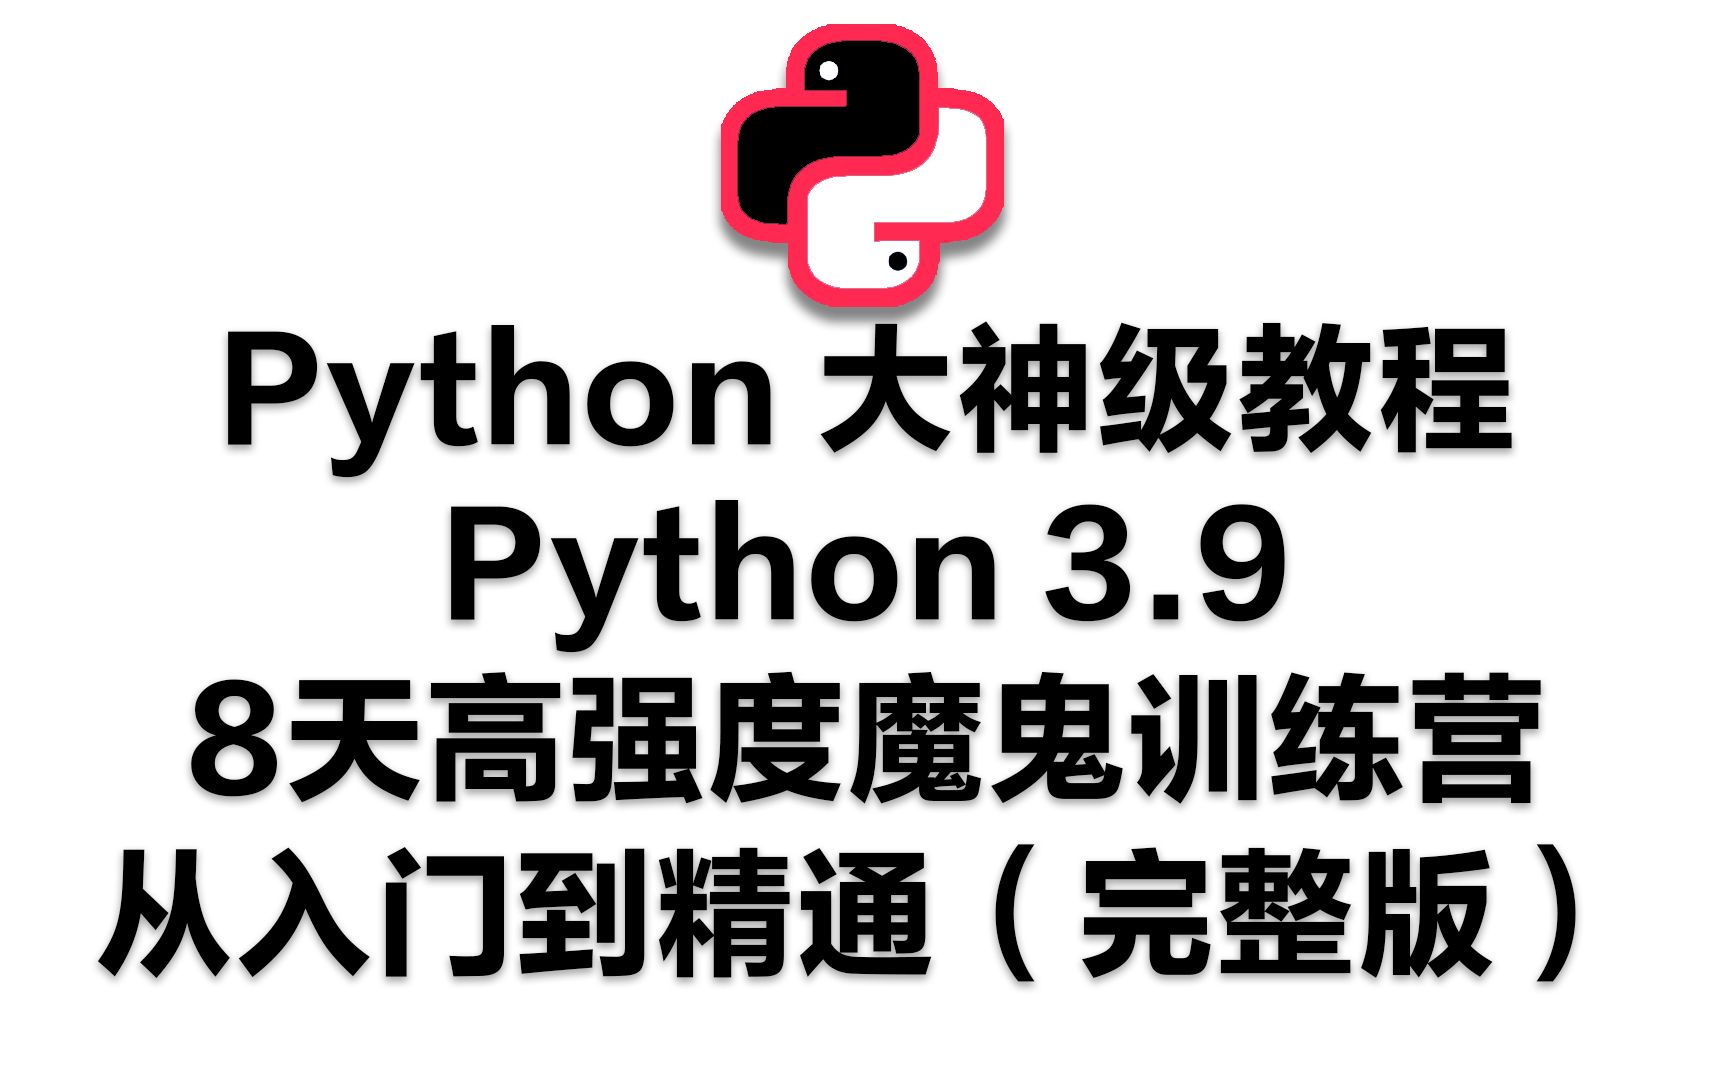 Python大神级教程-8天学会Python 3.9高强度魔鬼训练营从入门到精通（完整版）